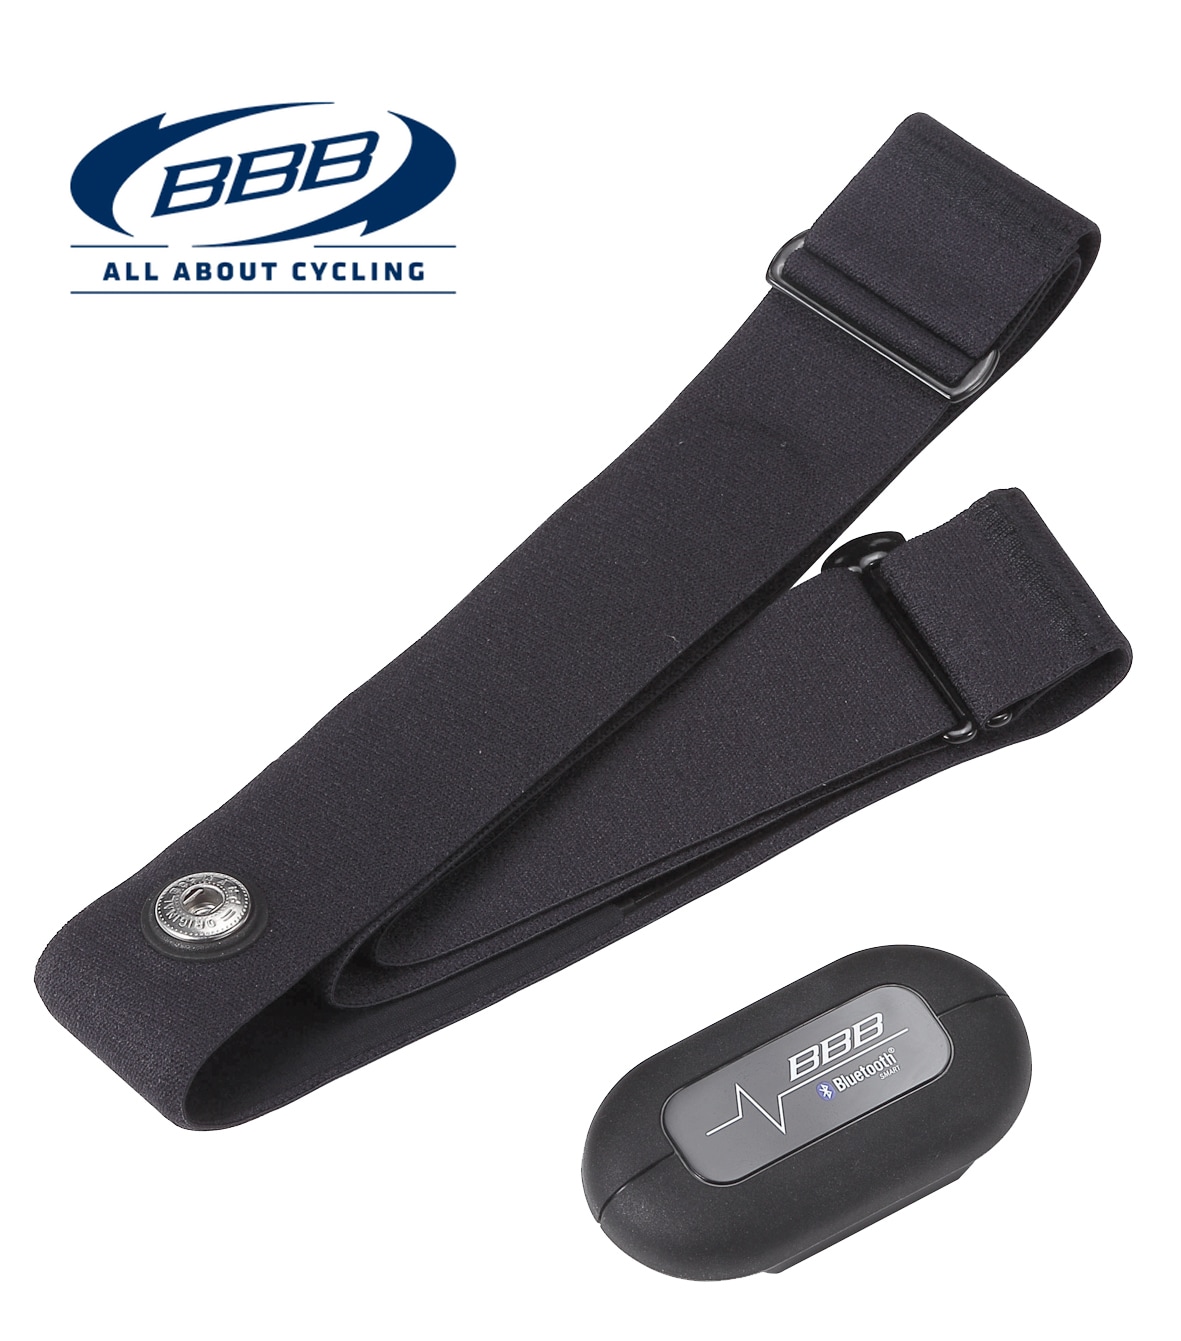 BBB Pulsband, Bluetooth® 4.0 Smart